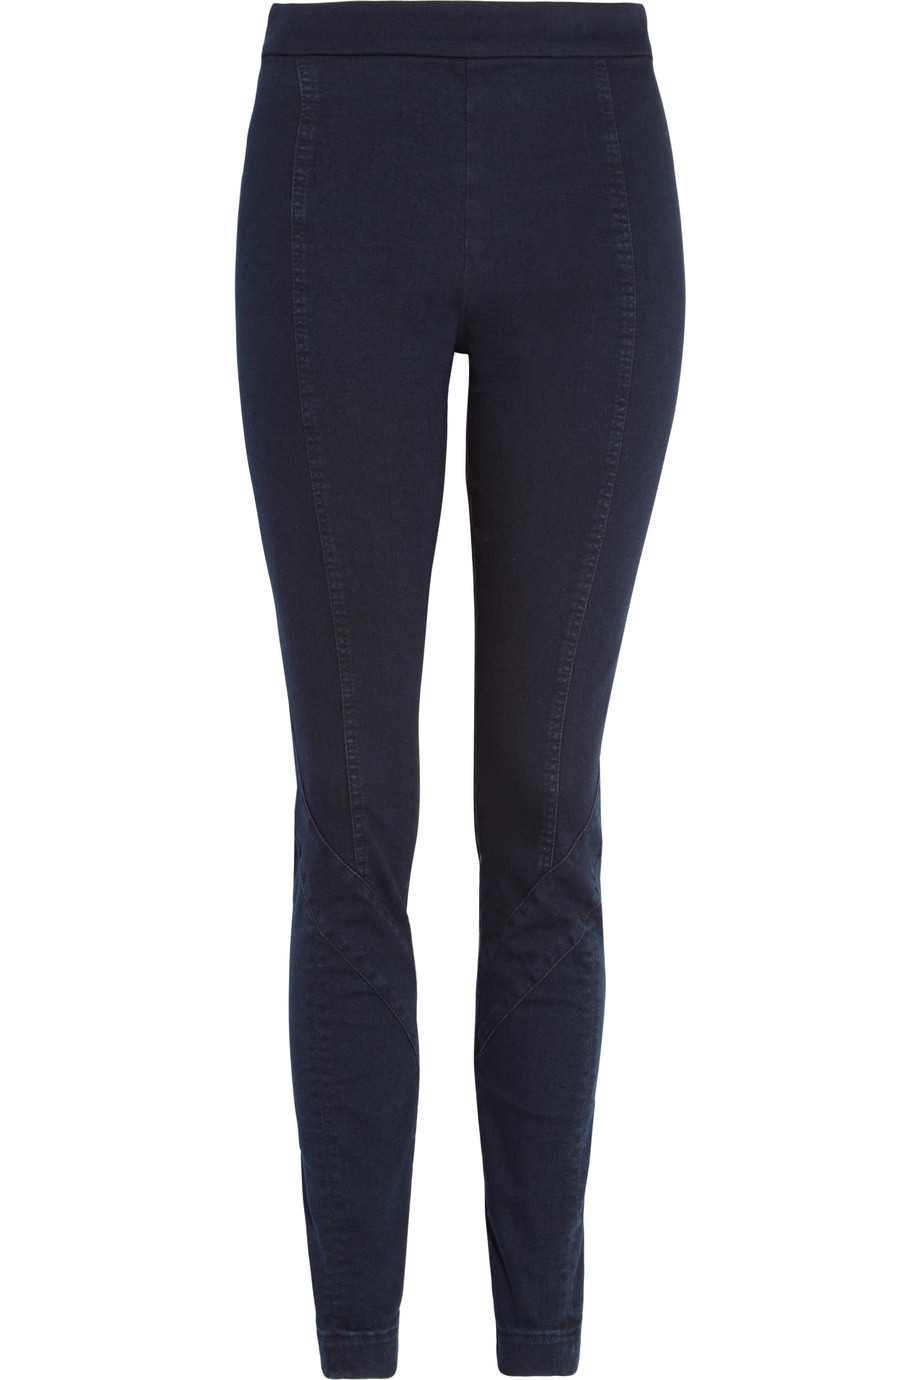 Donna Karan New York Highrise Skinny Jeans in Blue Lyst